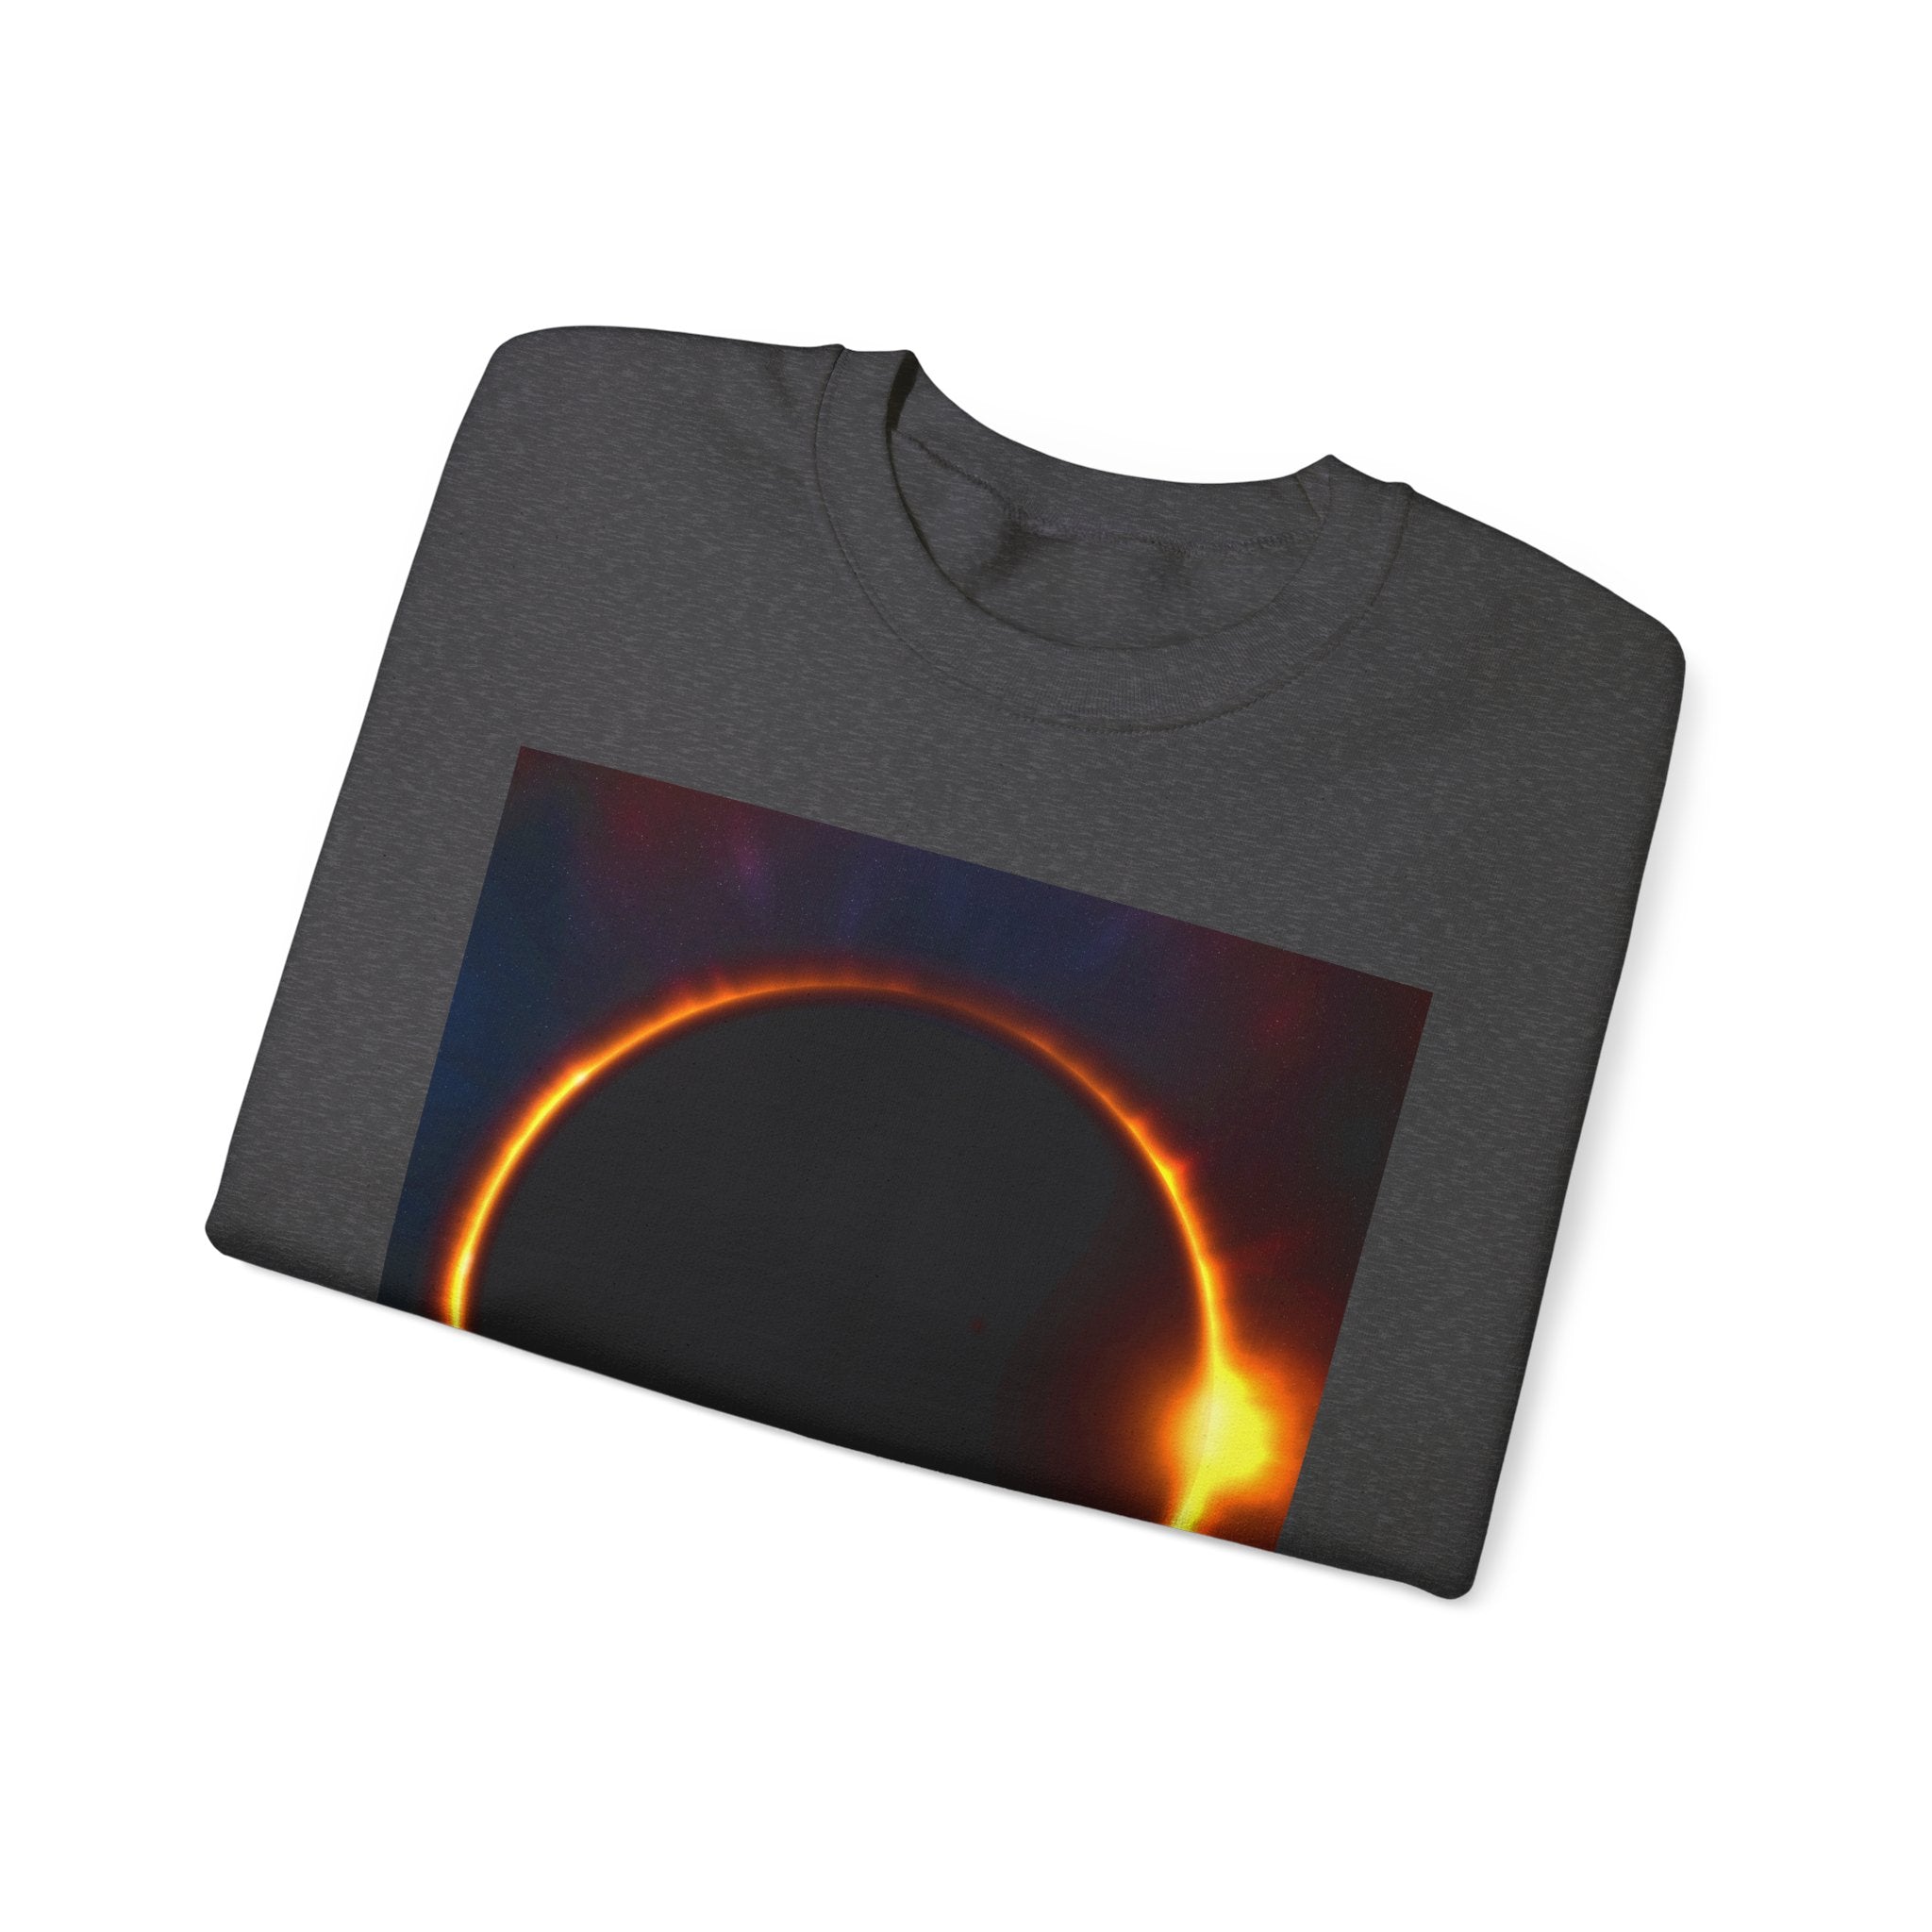 Eclipse of my Heart Crewneck Sweatshirt